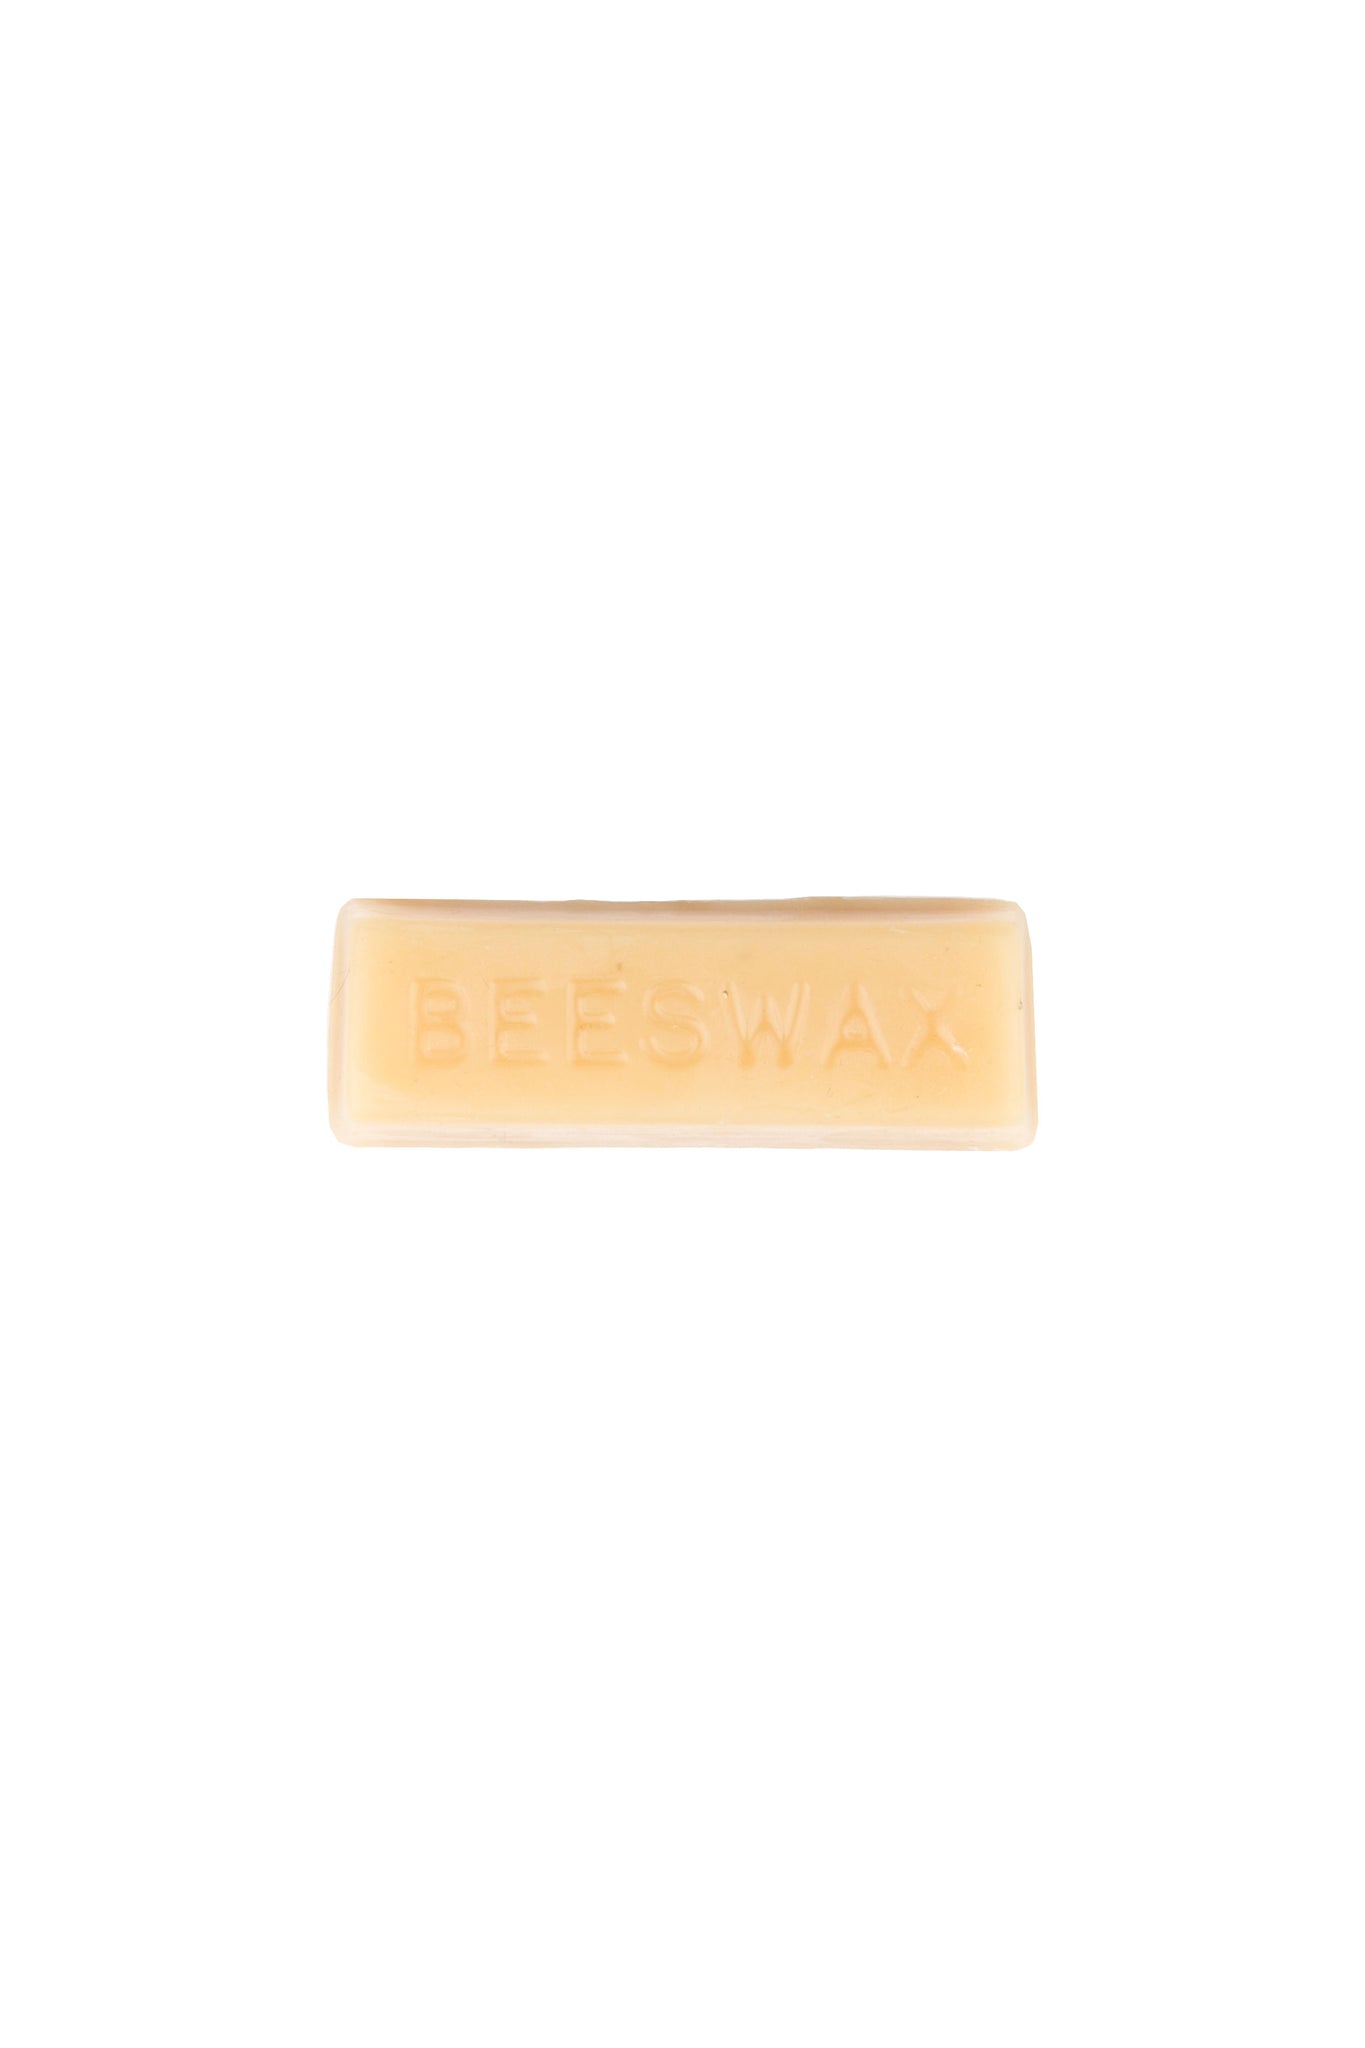 FUSION™ Distressing Beeswax Block